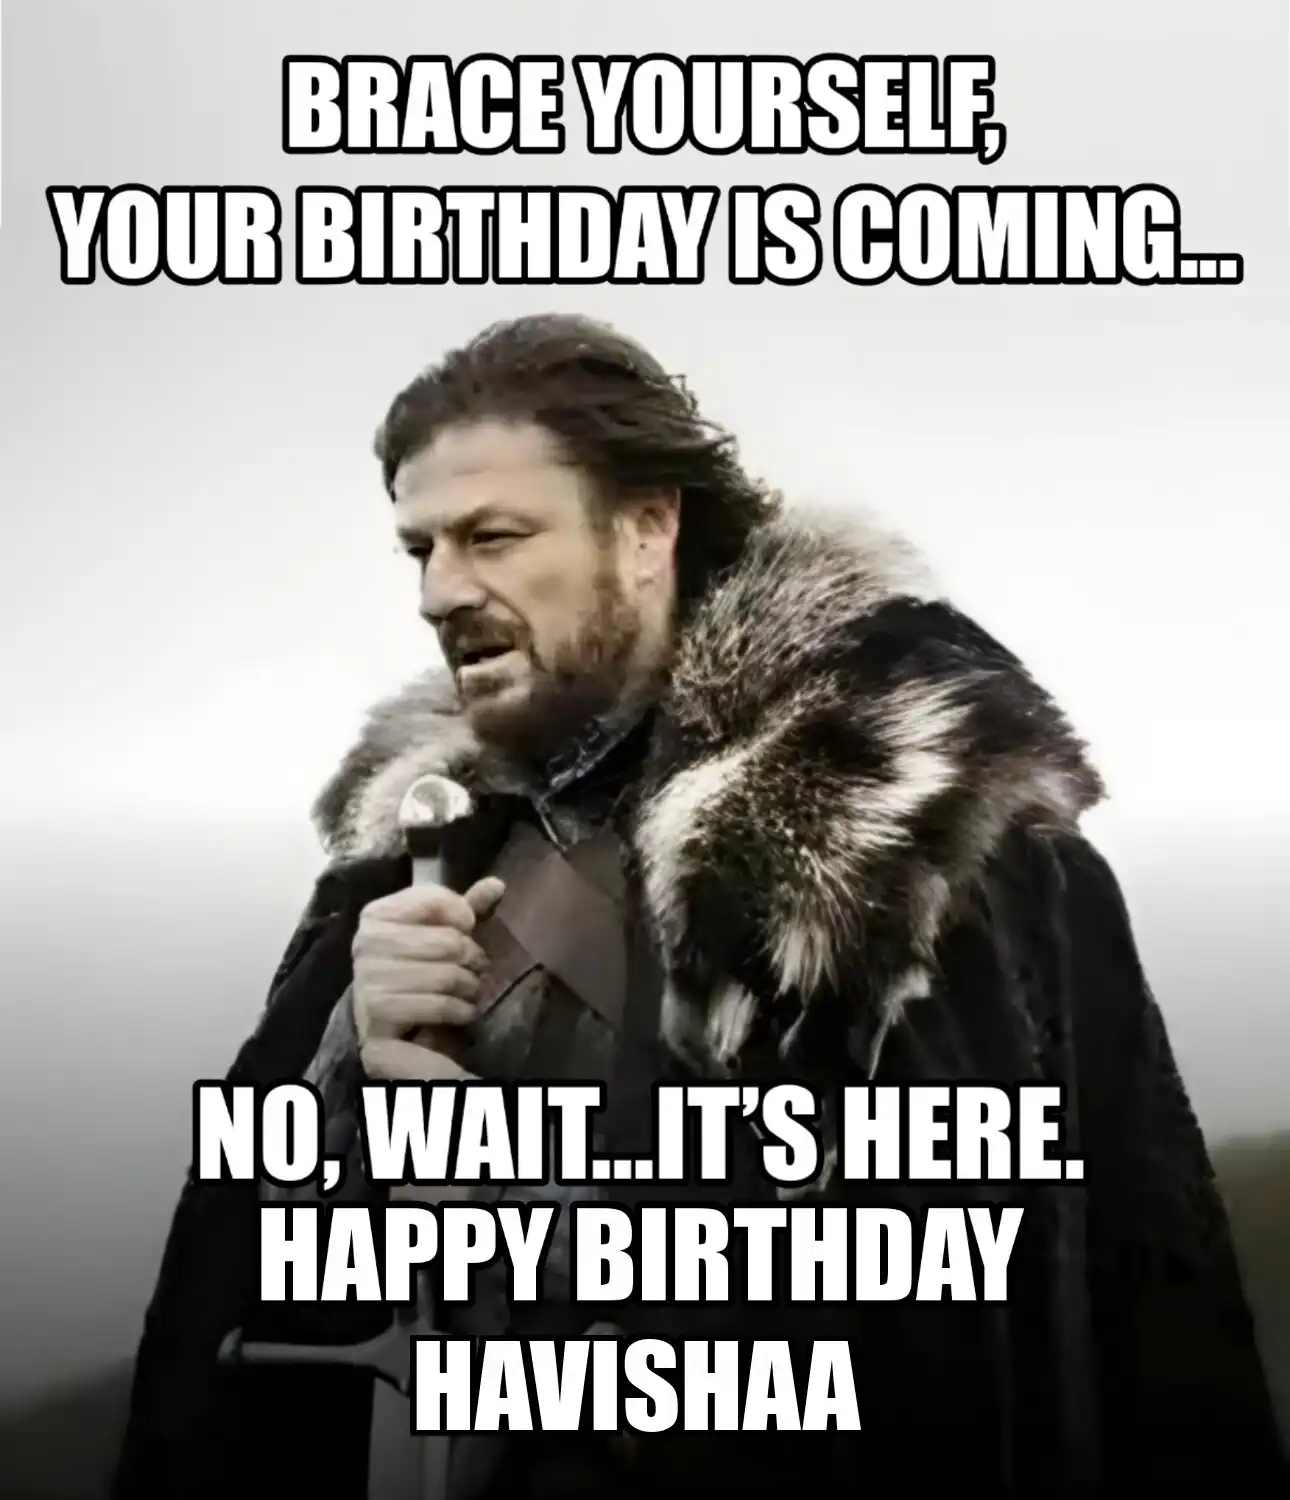 Happy Birthday Havishaa Brace Yourself Your Birthday Is Coming Meme